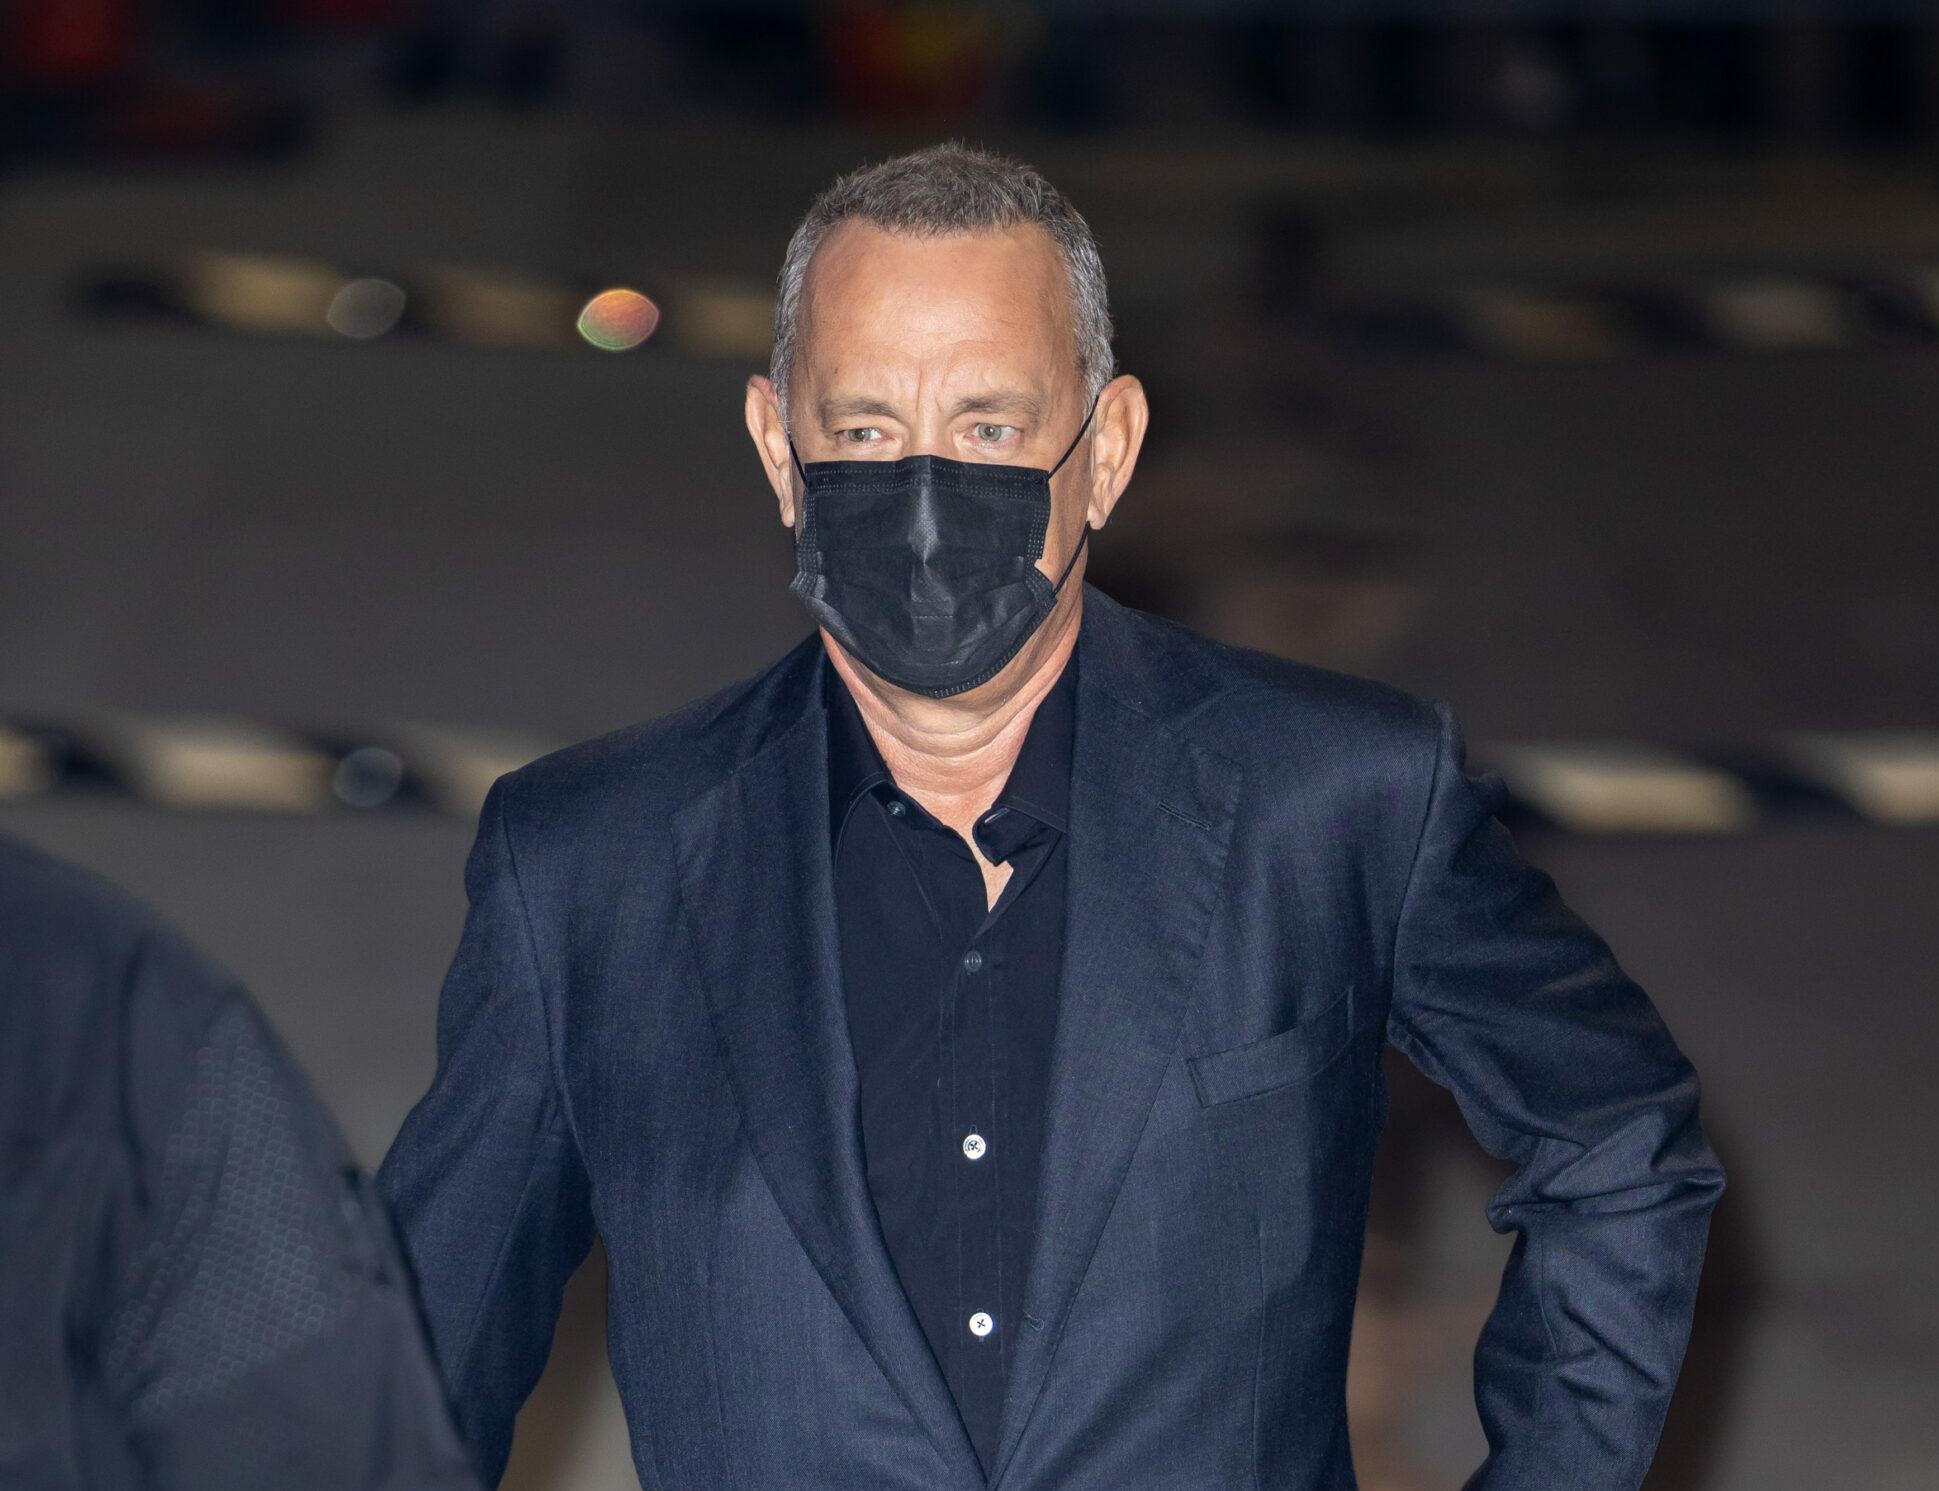 Celebrities are seen at Kimmel, Tom Hanks